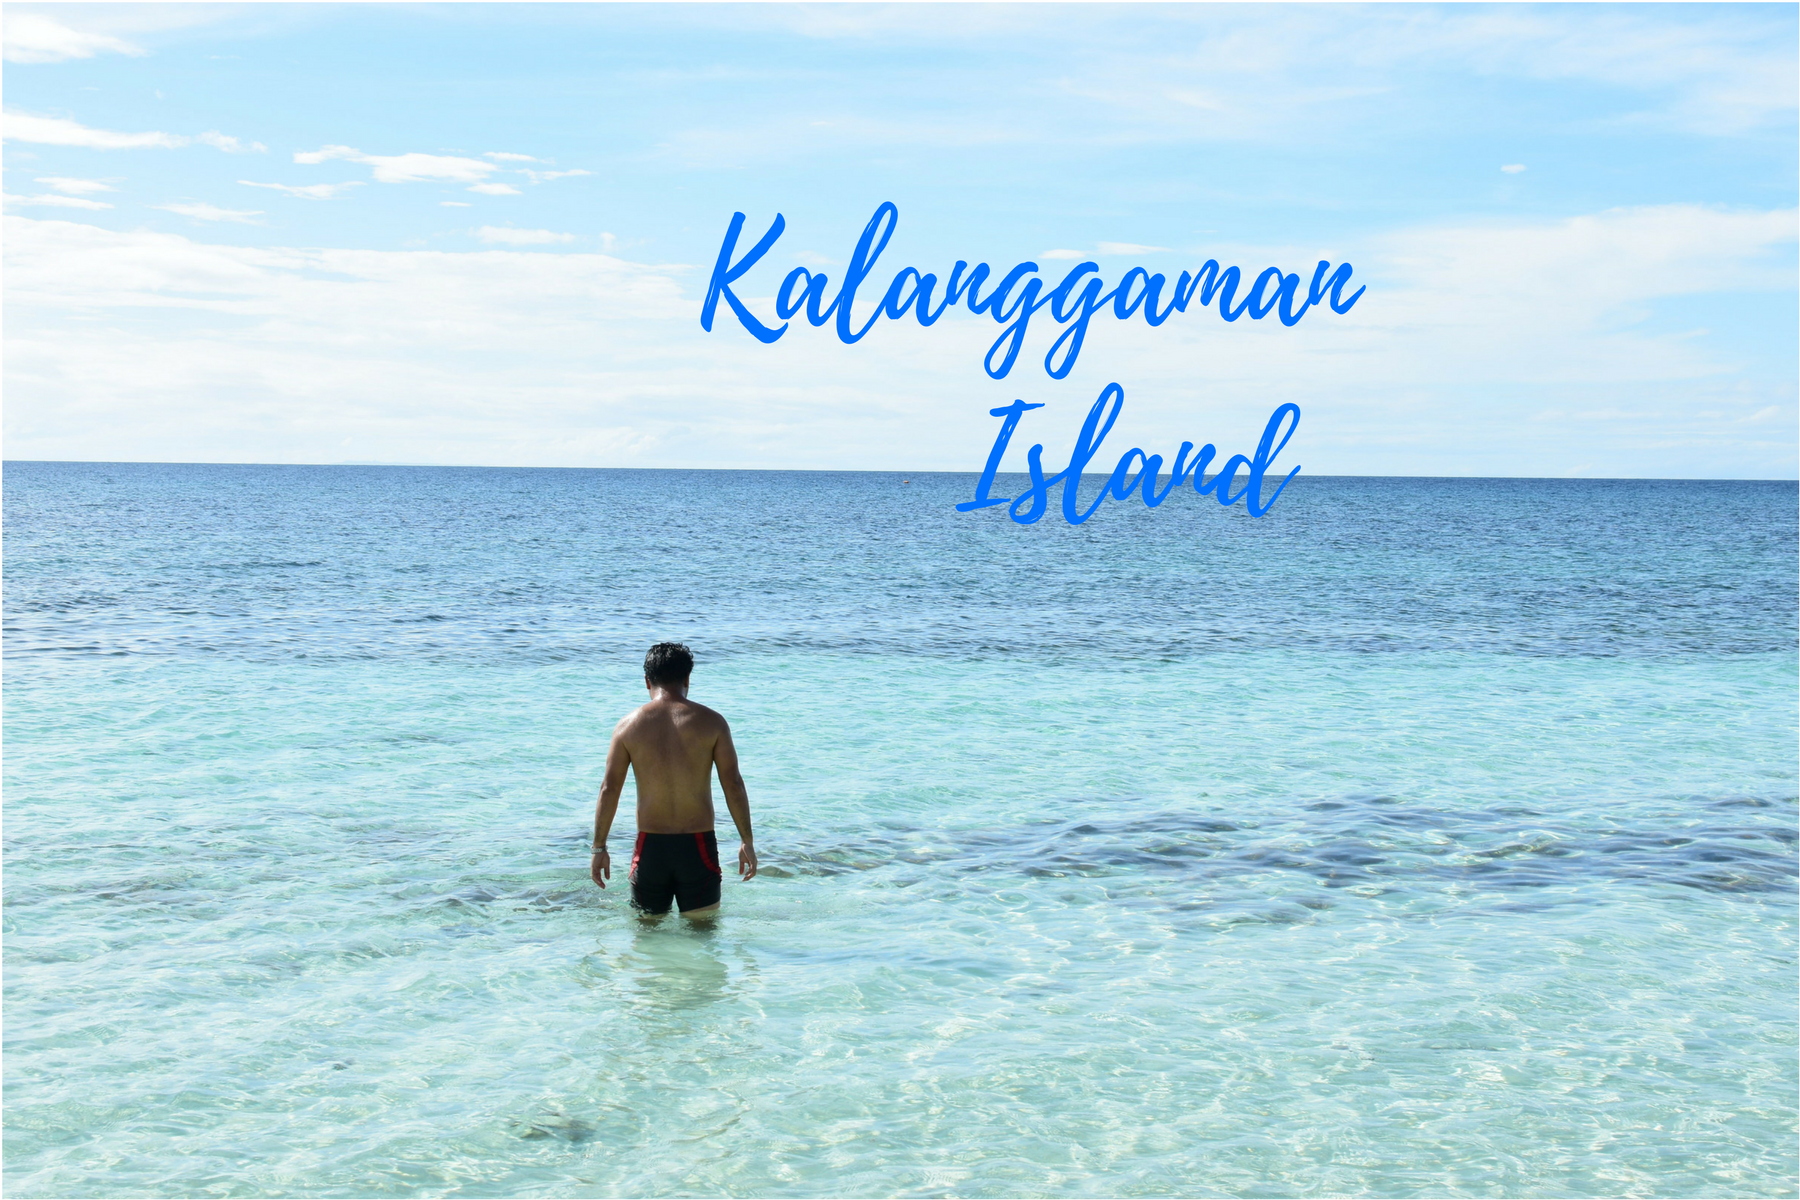 Kalanggaman Island, Palompon, Leyte